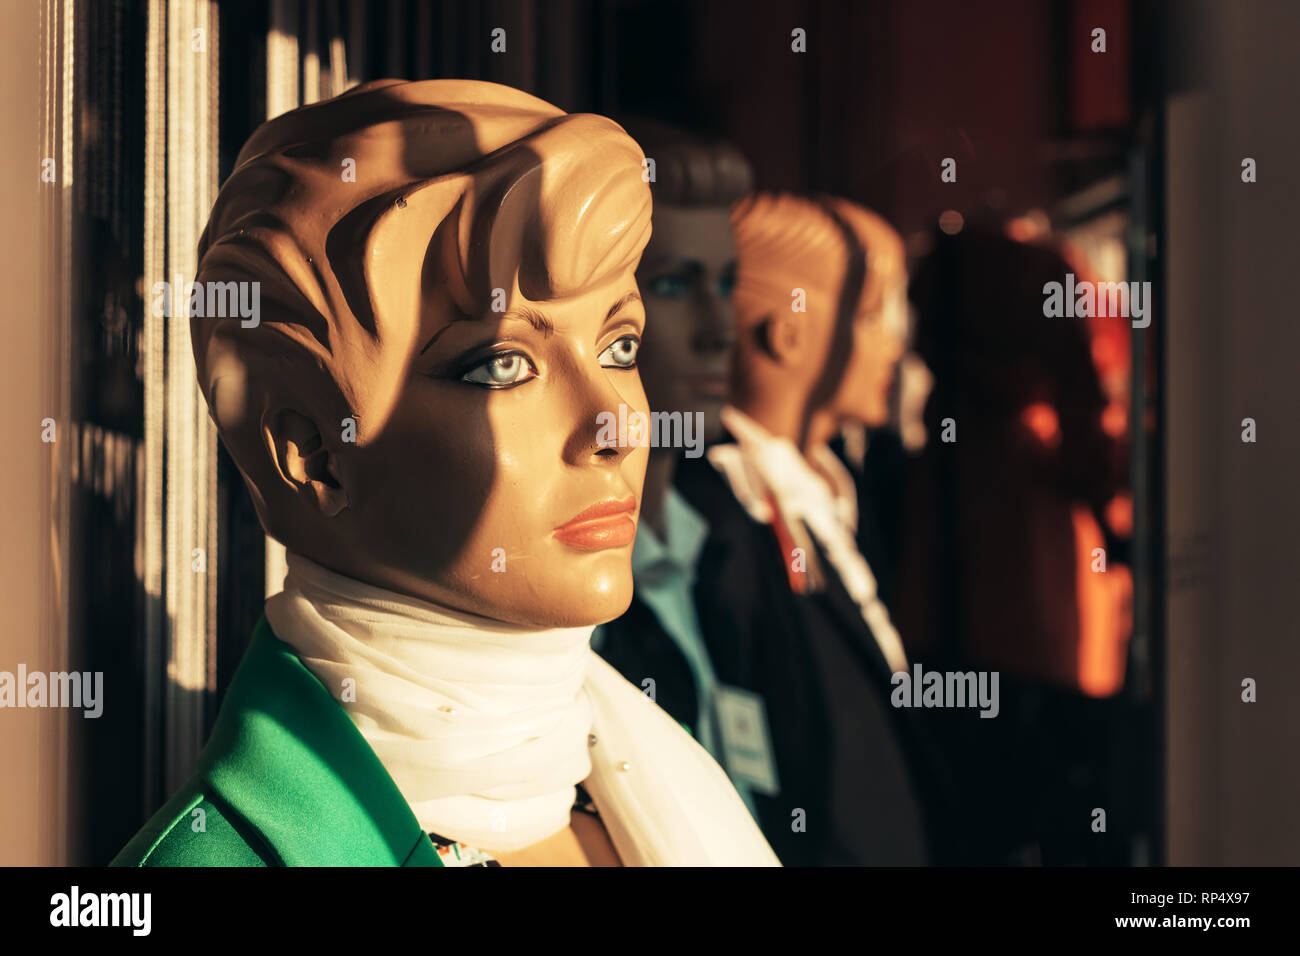 Vintage Tuch shop manequinn Puppen in Store Fenster Stockfoto